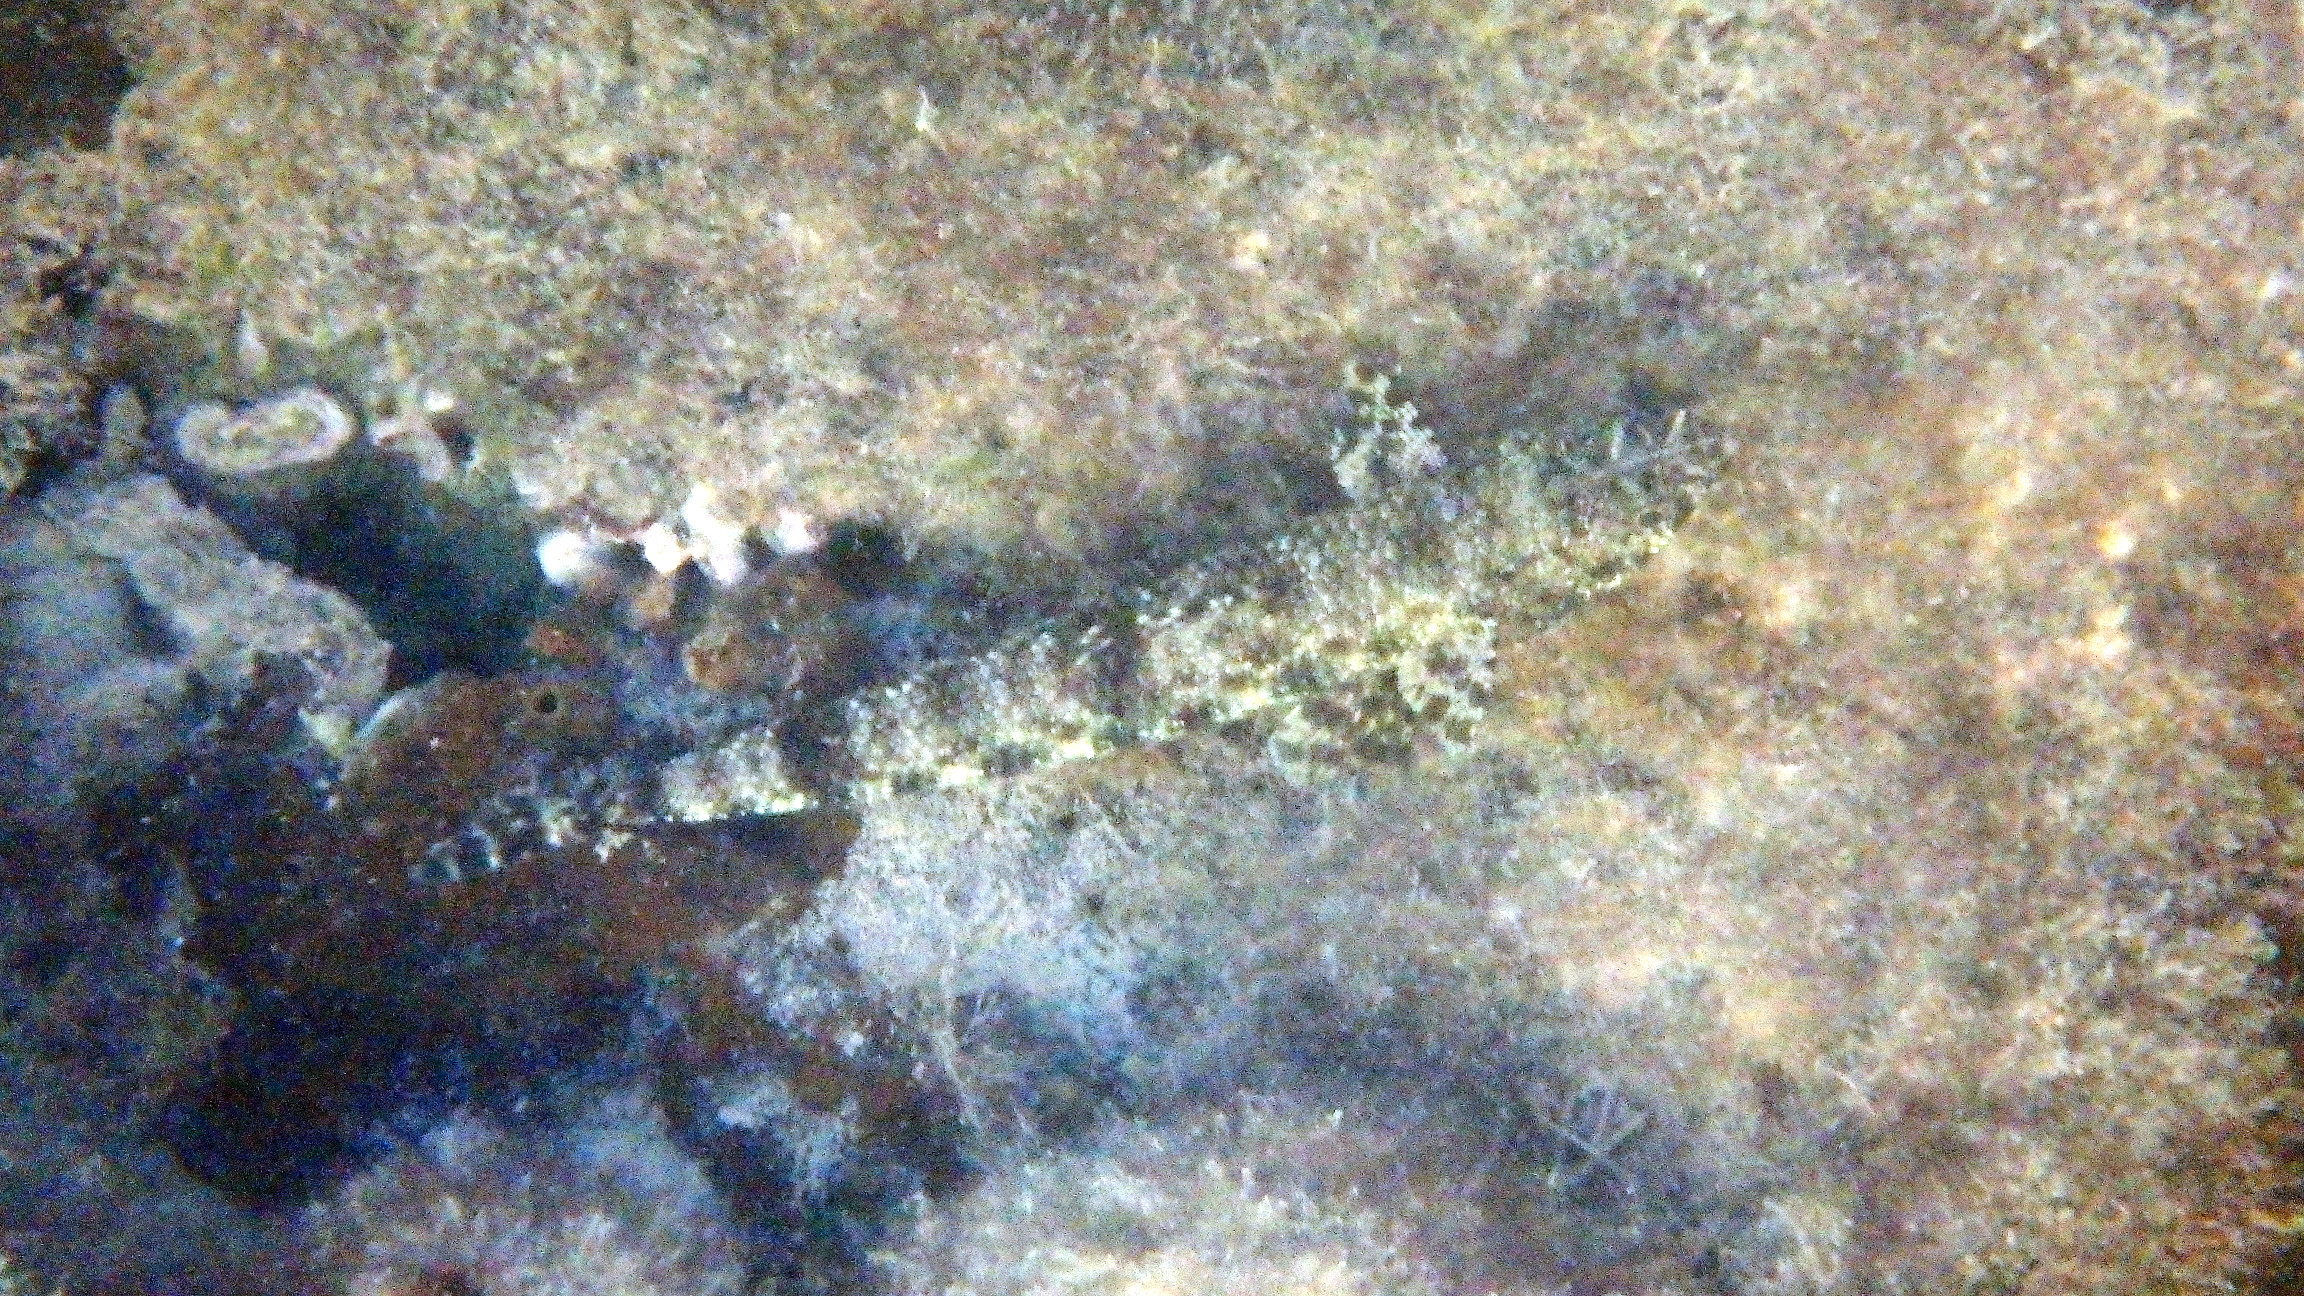 Saurida gracilis